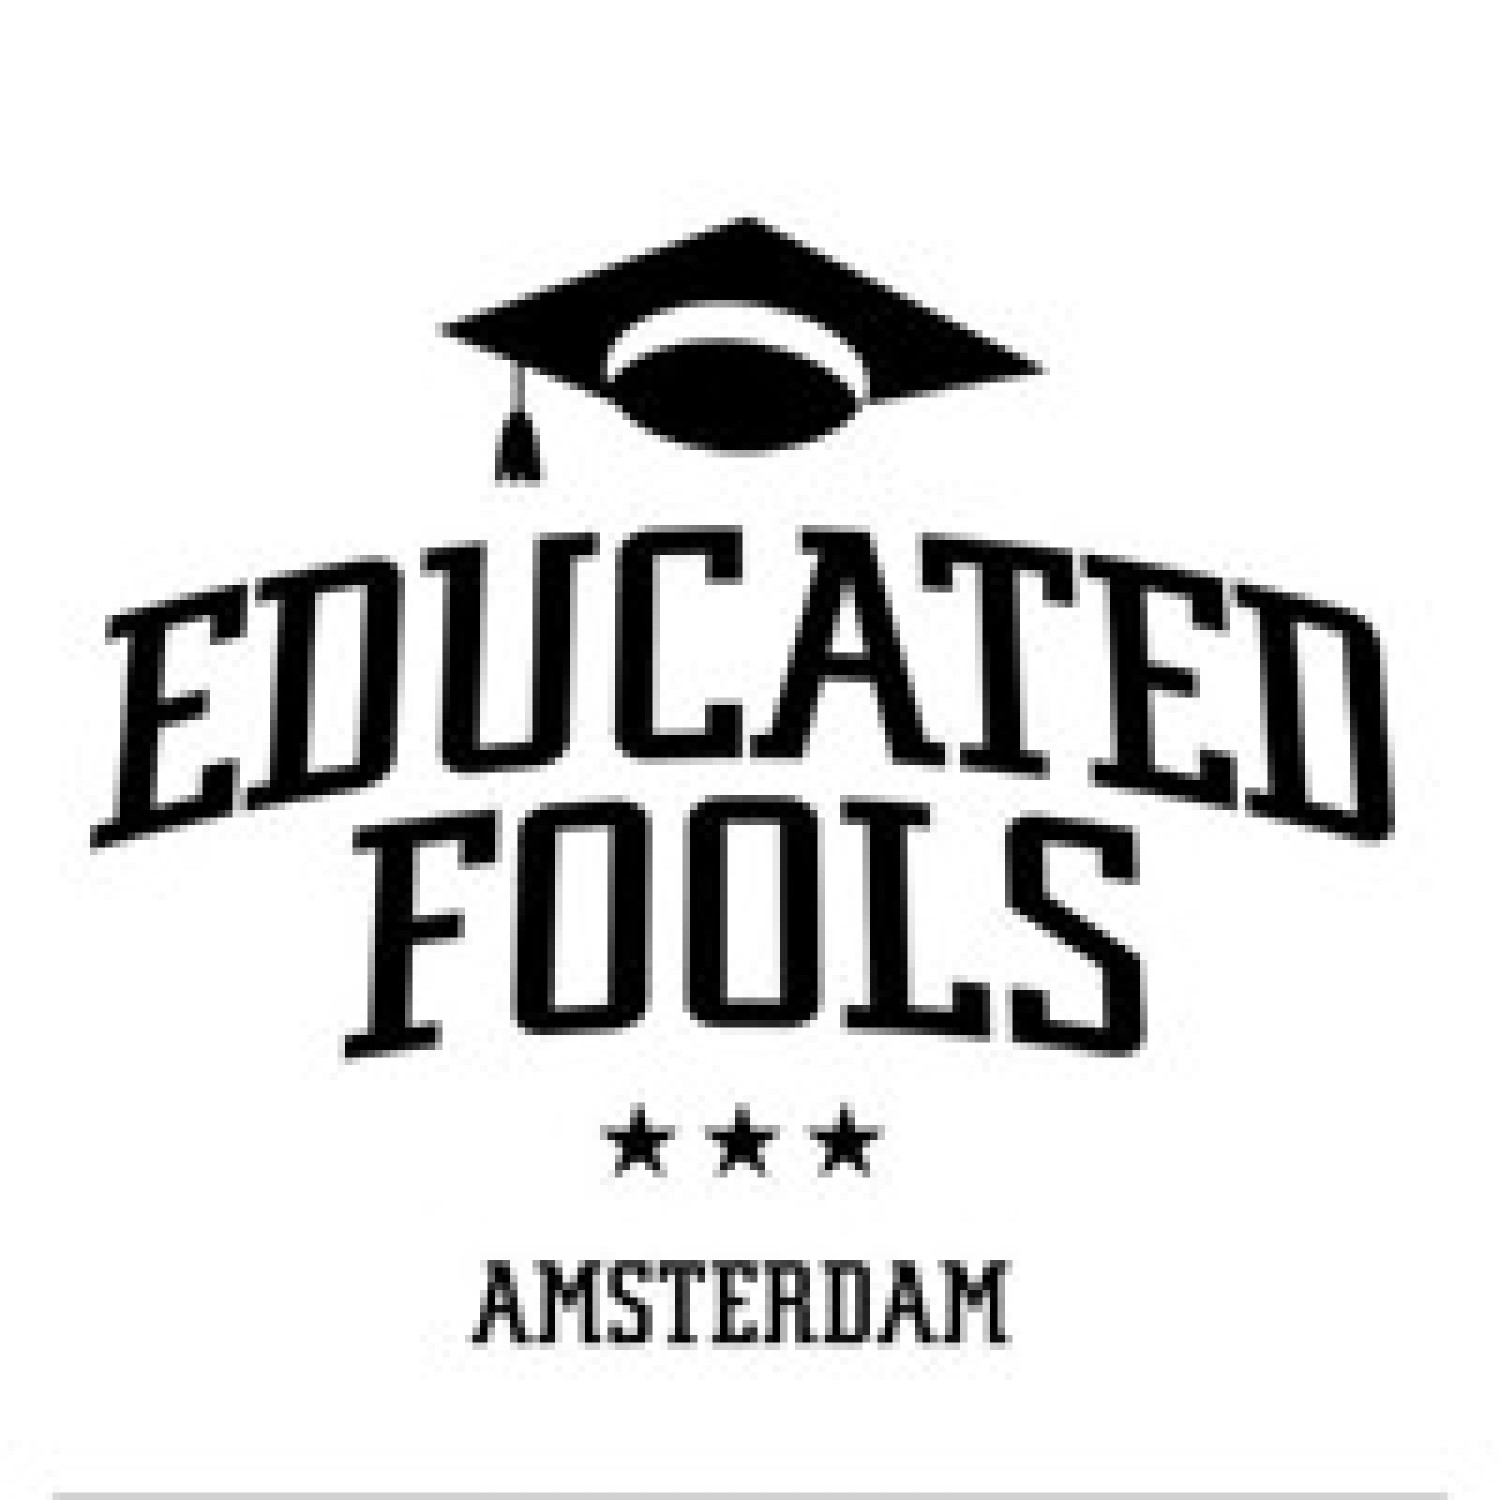 Educated Fools